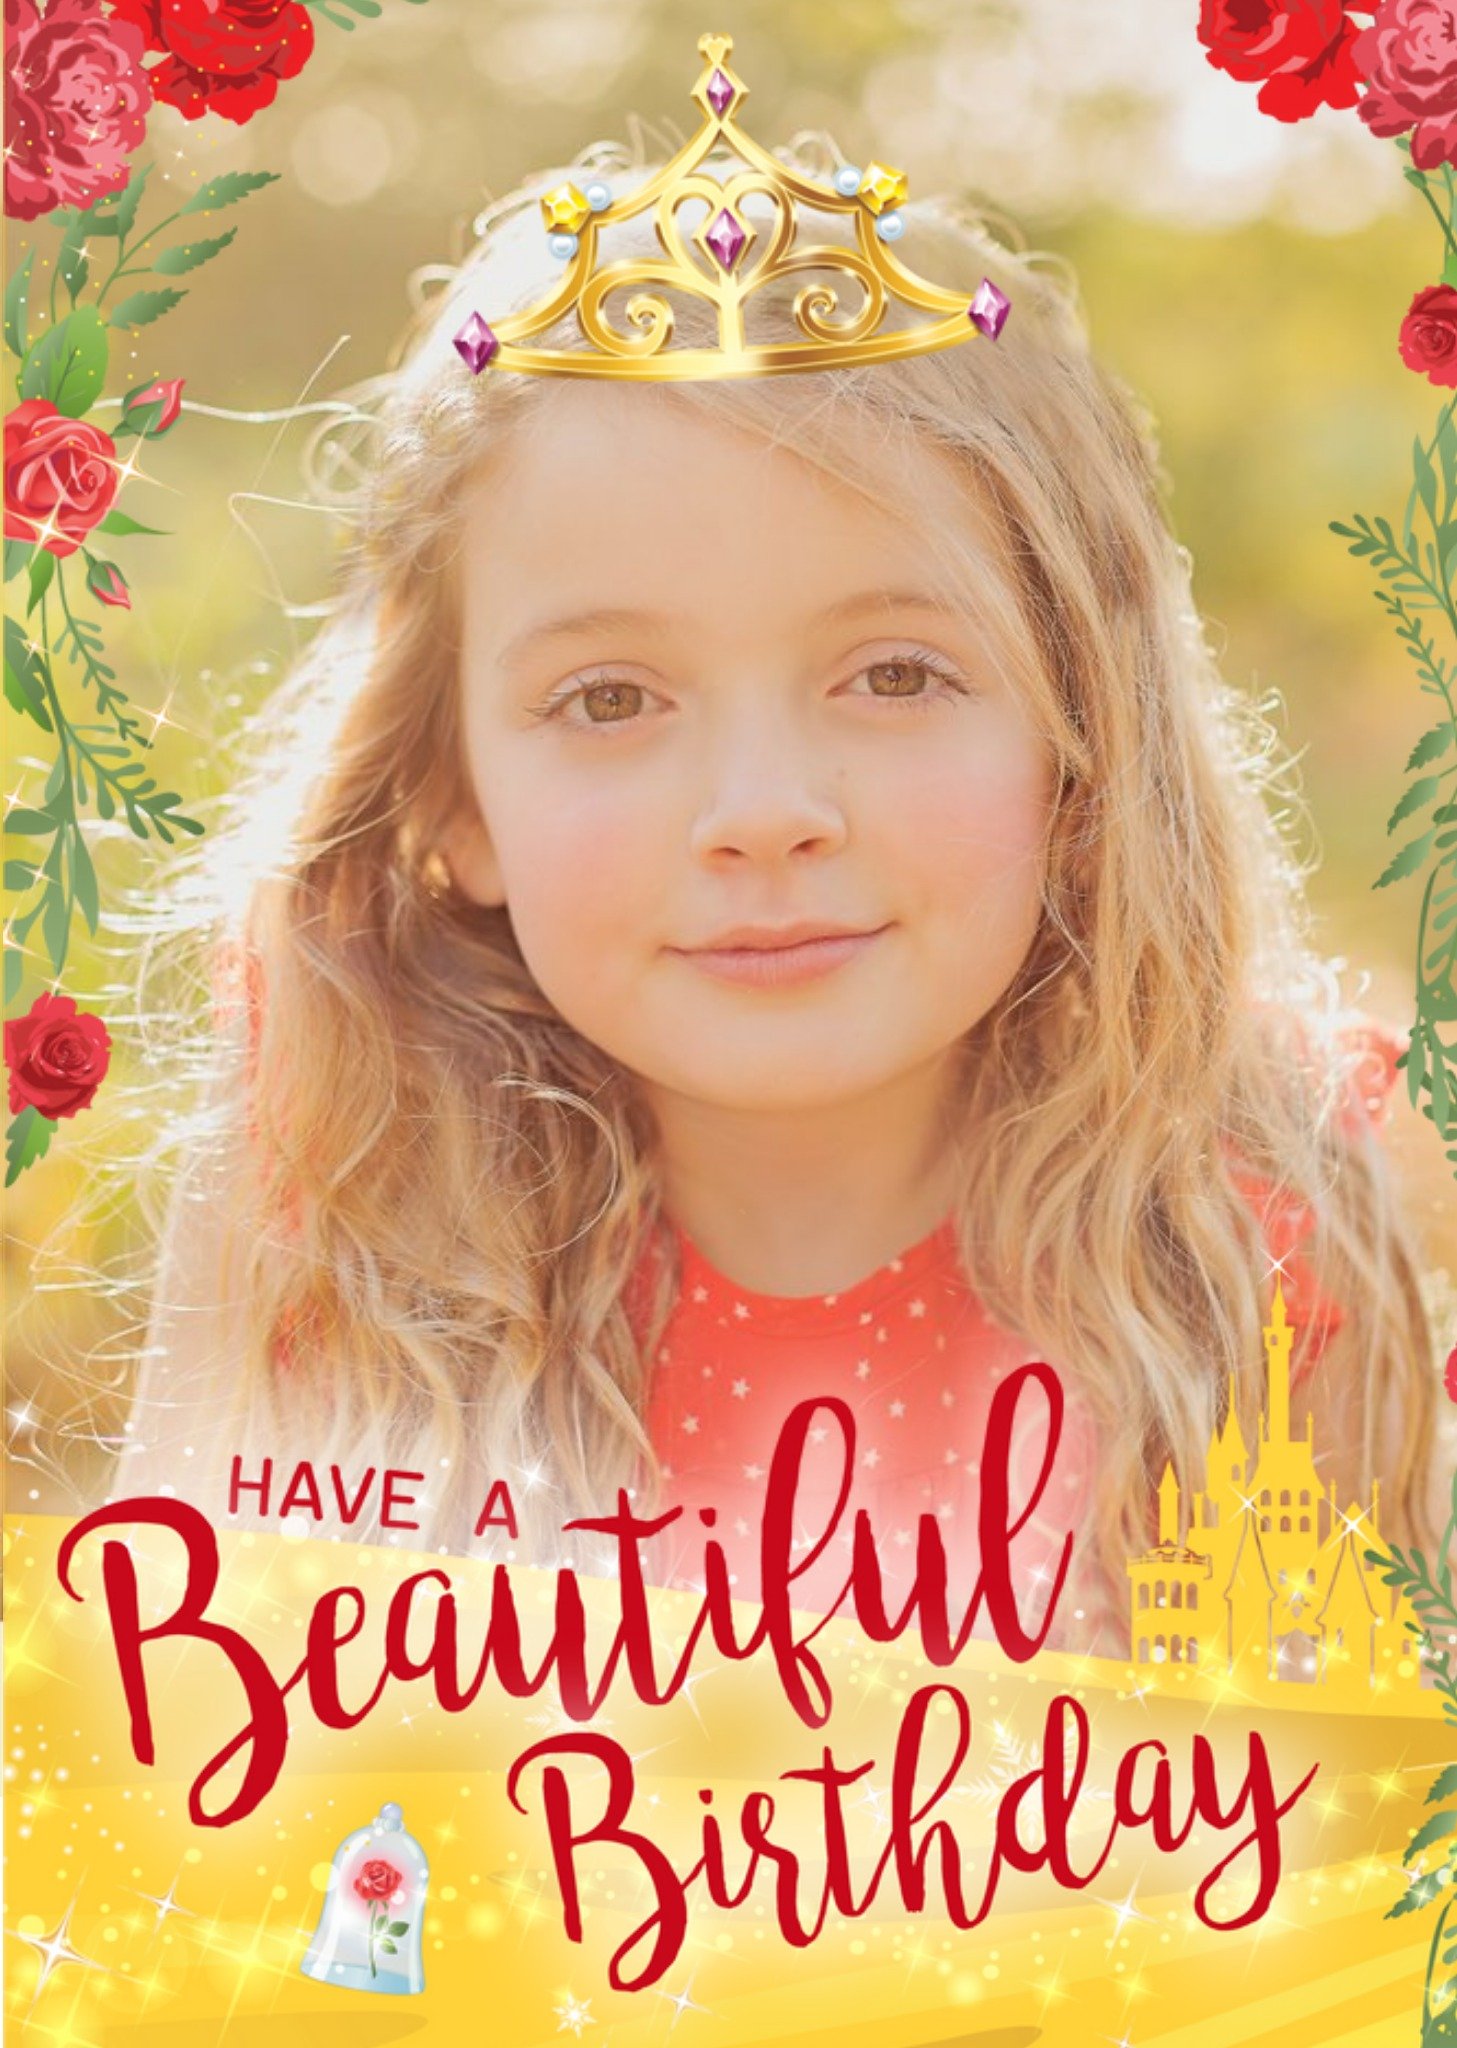 Disney Princess Beauty And The Beast Photo Upload Birthday Card Ecard